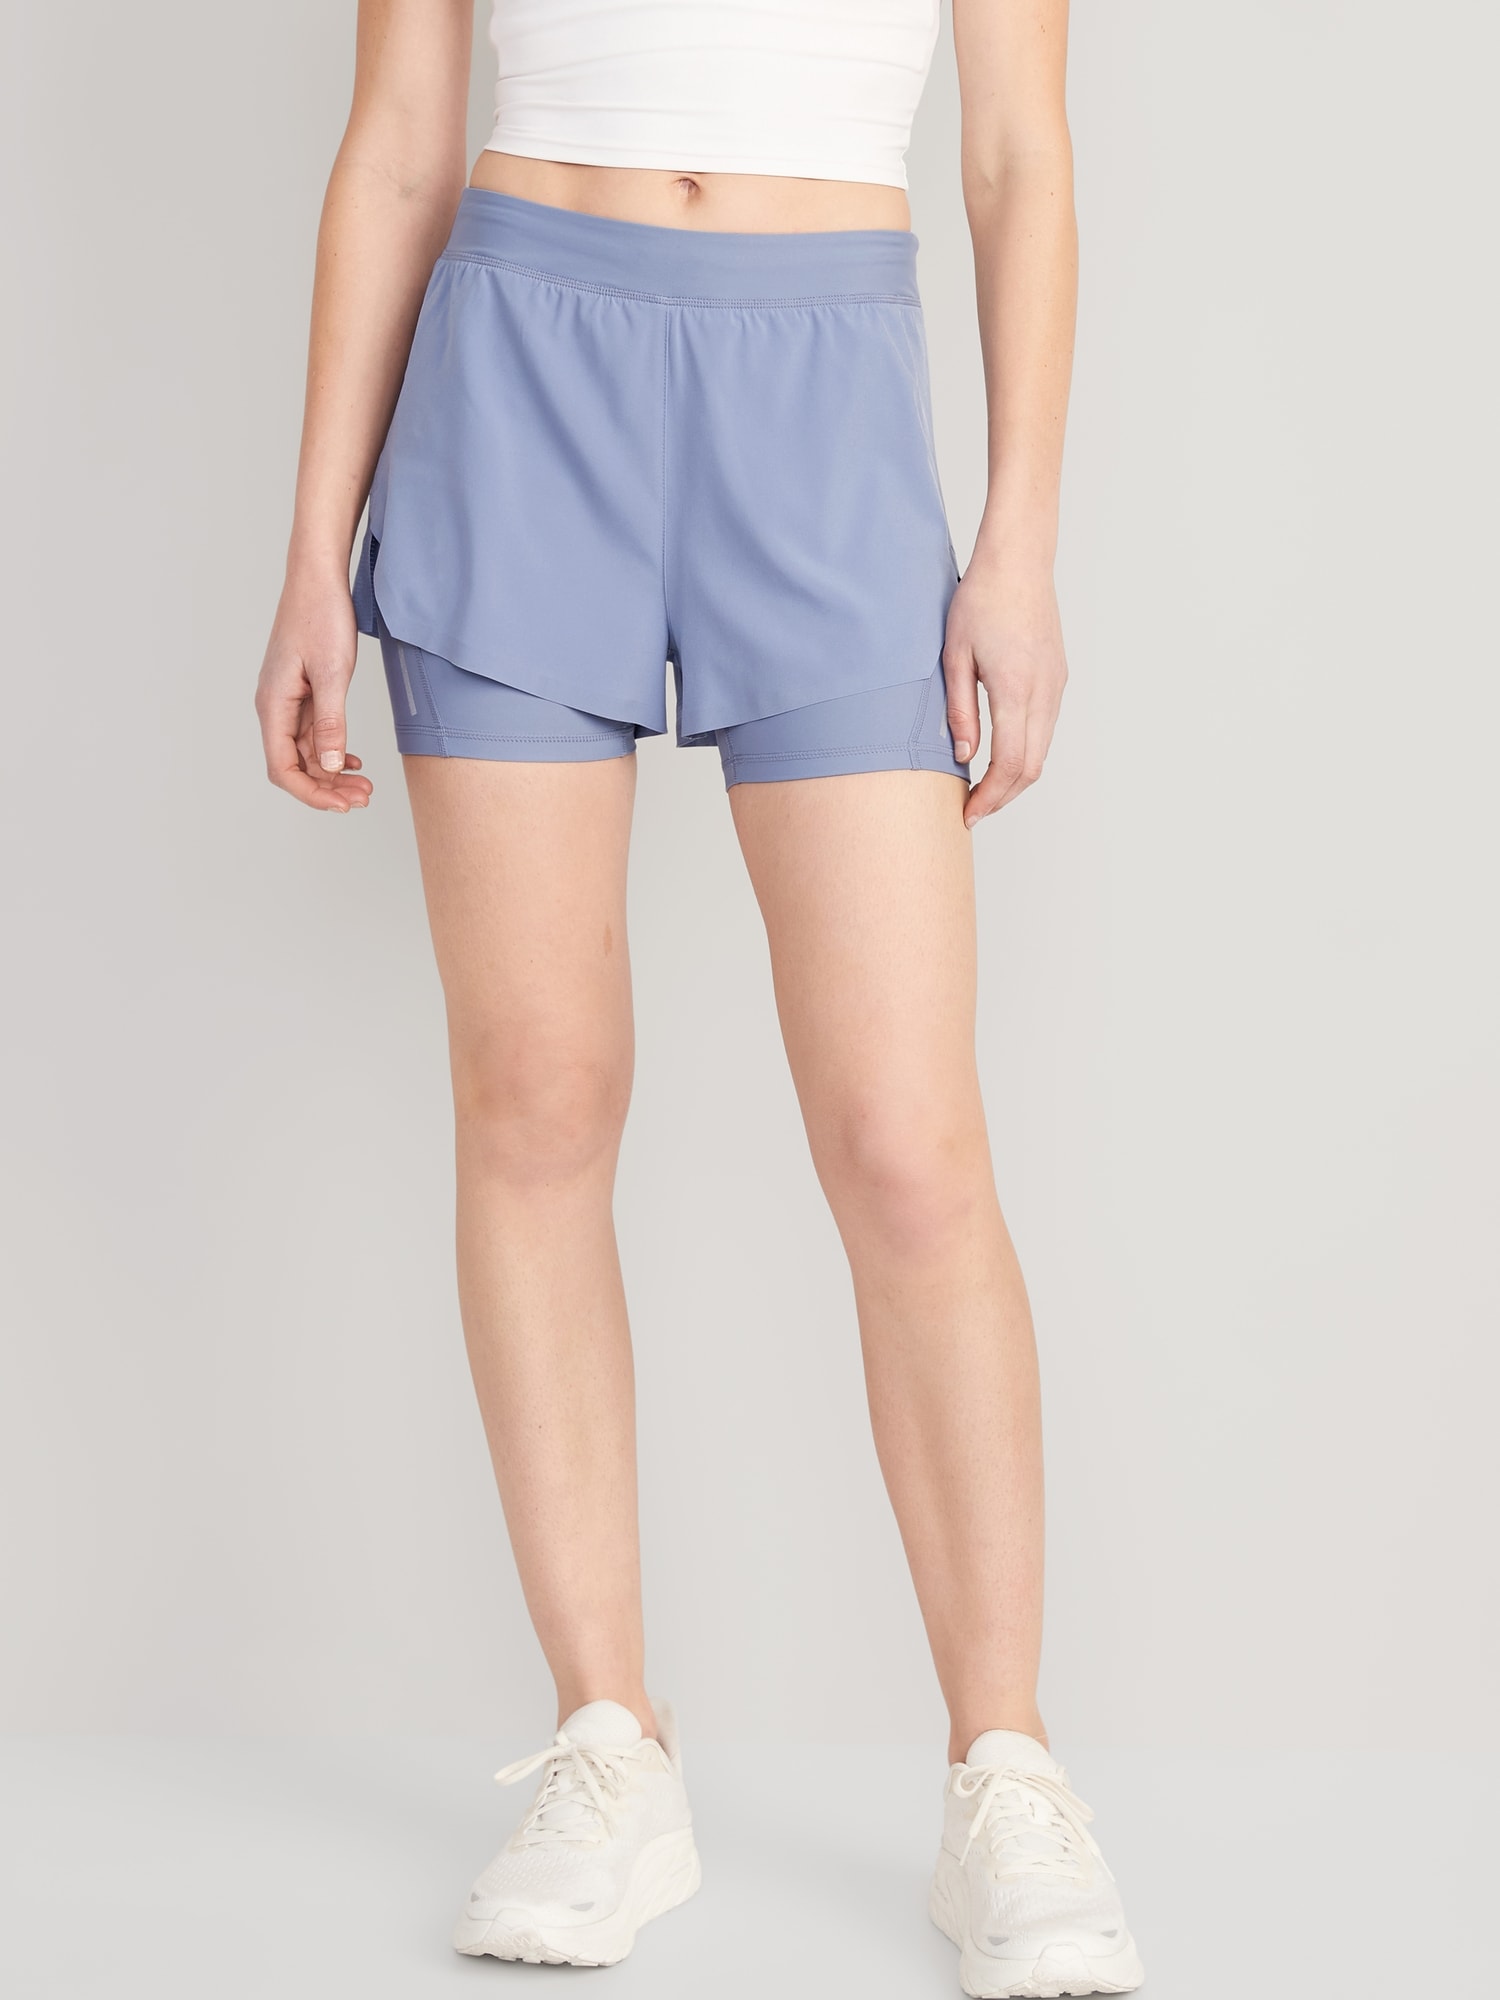 ZUTY 10/ 5 Biker Shorts Women High Waisted with 2 Hidden Pockets Workout  Athletic Compression Yoga Long Shorts Grey 2XL - Yahoo Shopping